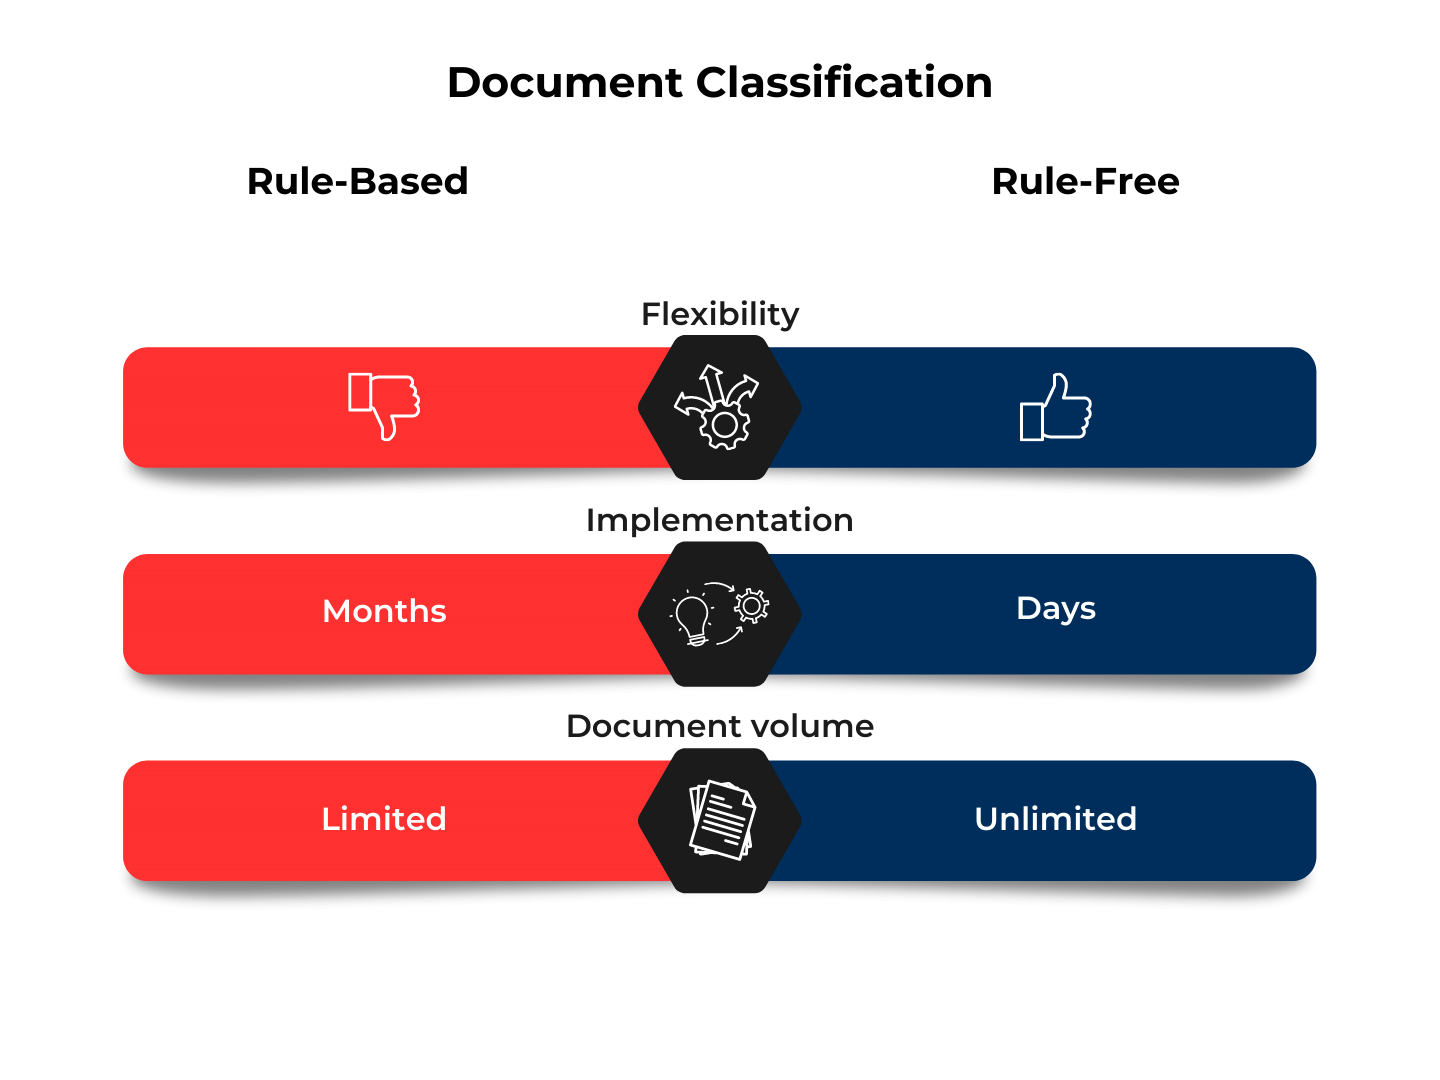 Vergleich Rule-Based vs. Rule-Free Document Classification